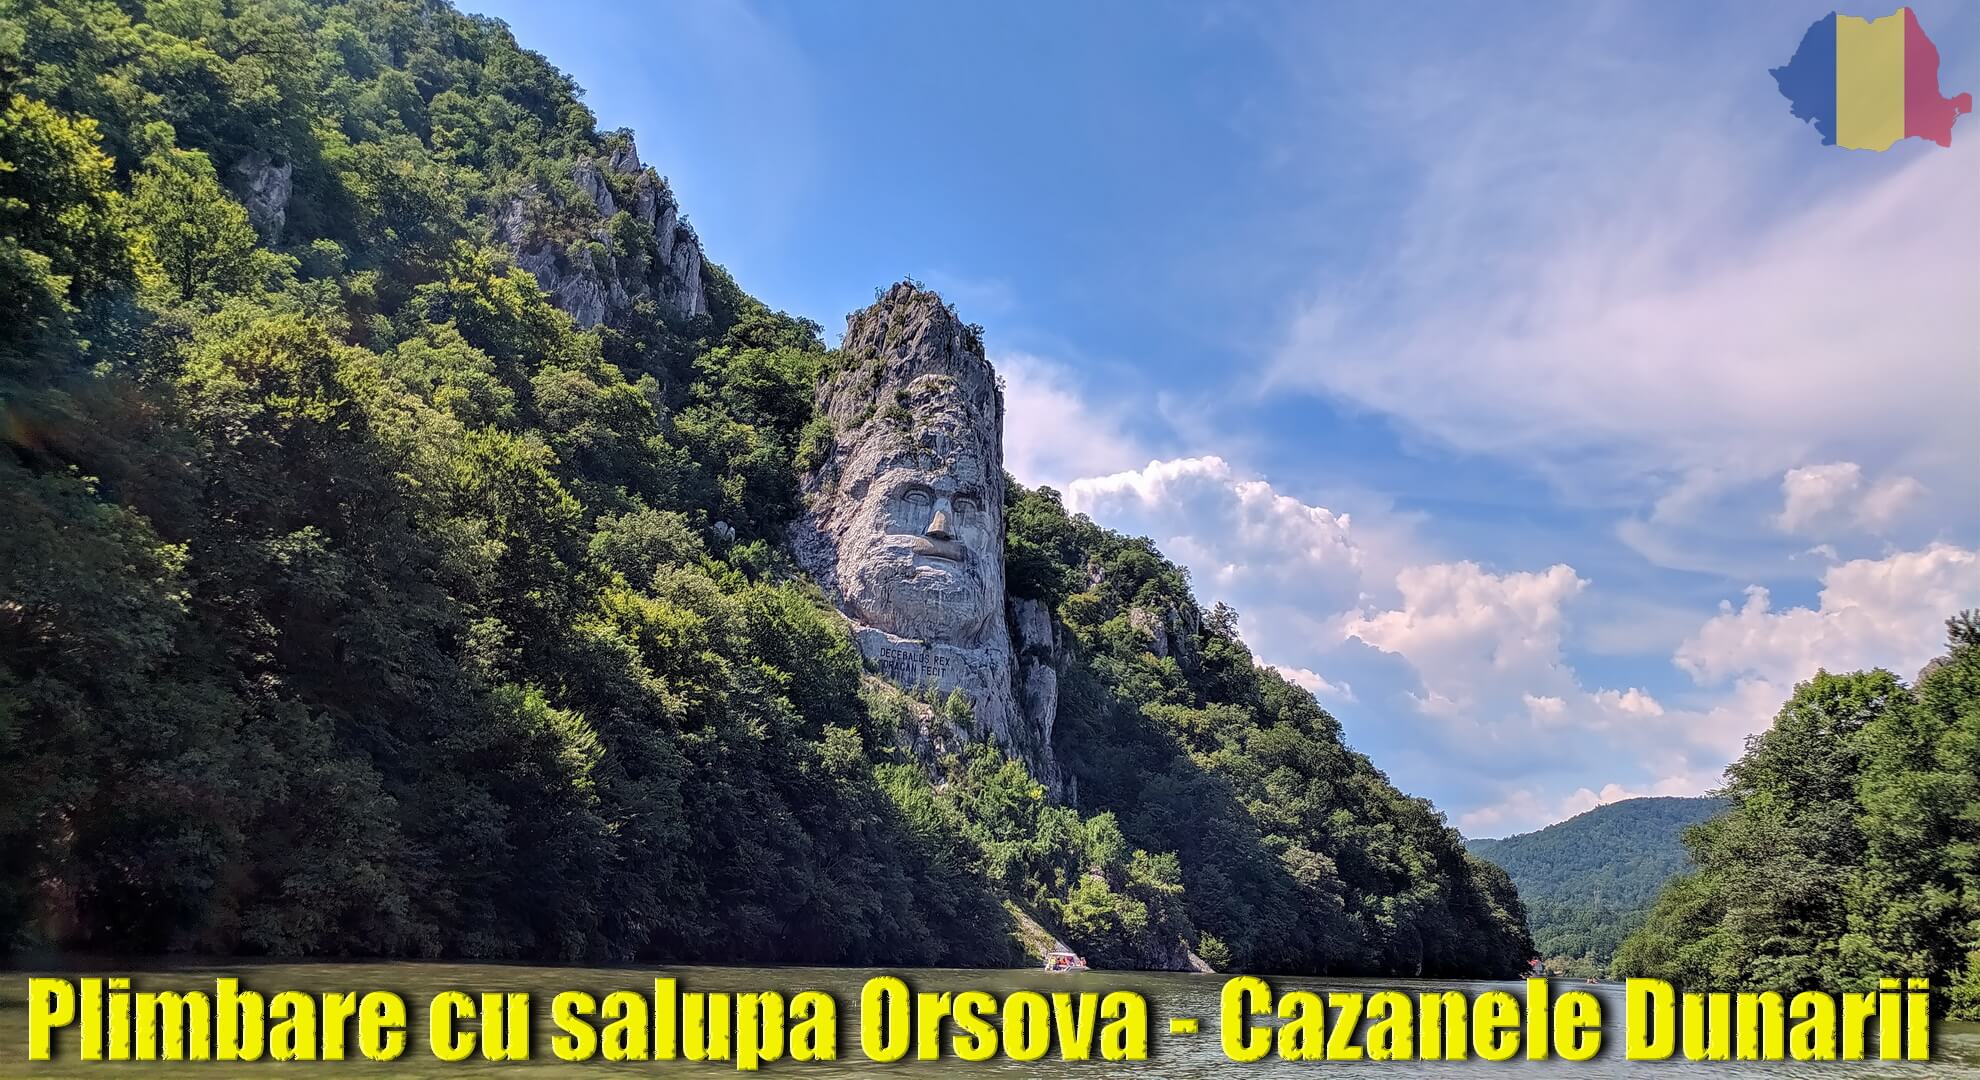 Plimbare cu salupa Orsova - Cazanele Dunarii 2019